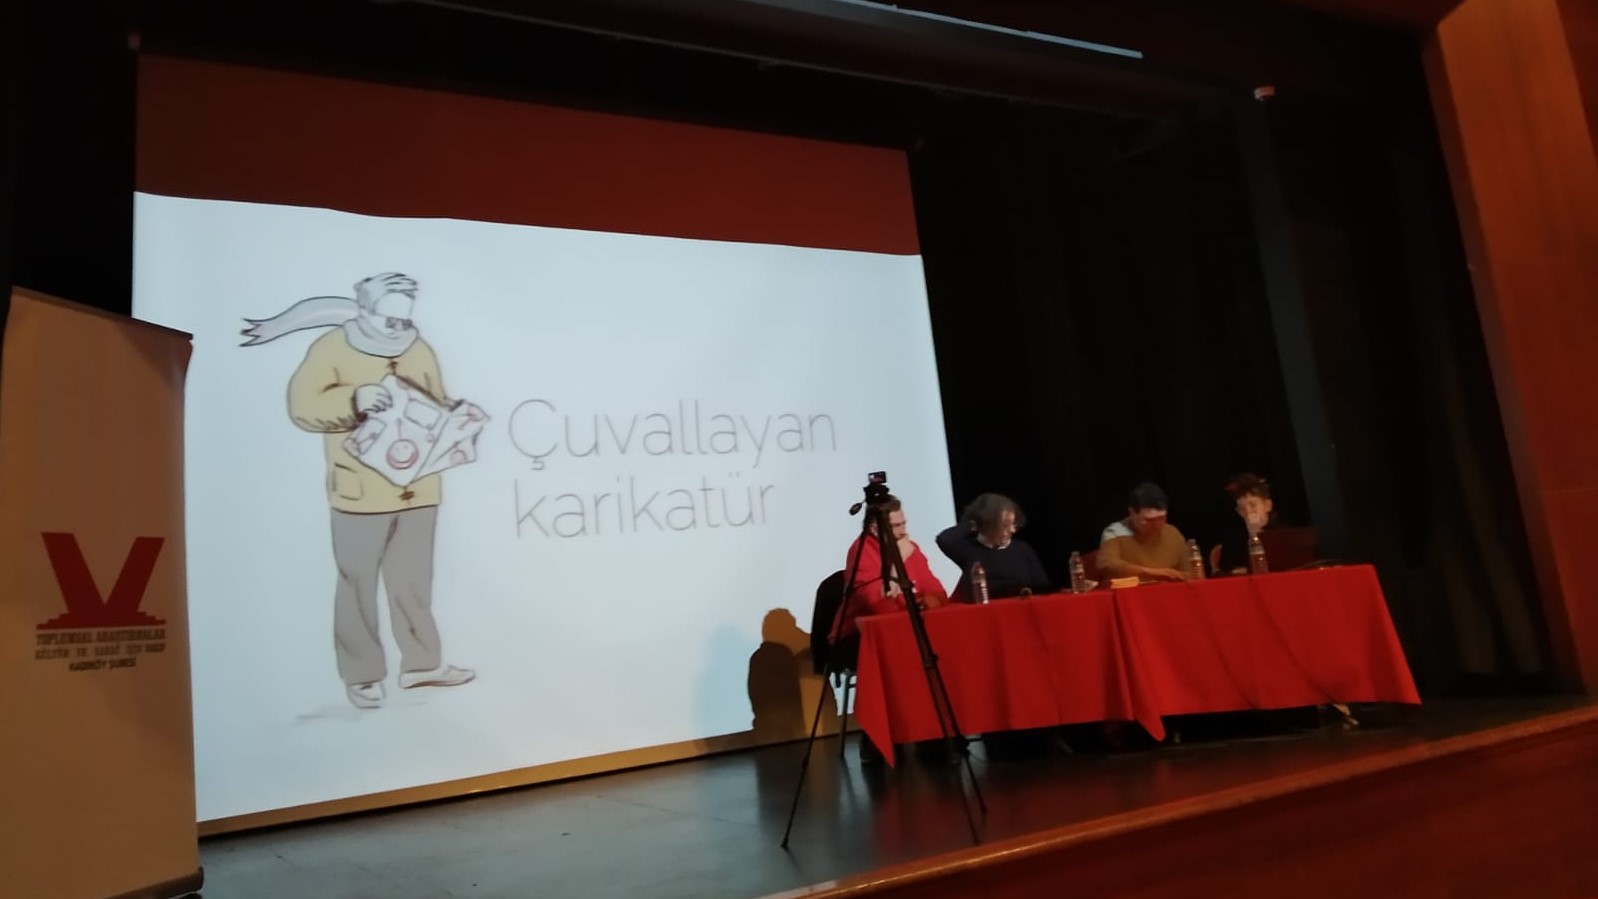 TAKSAV’da “Muhalefetin dili mizah” konuşuldu | Kaos GL - LGBTİ+ Haber Portalı Haber